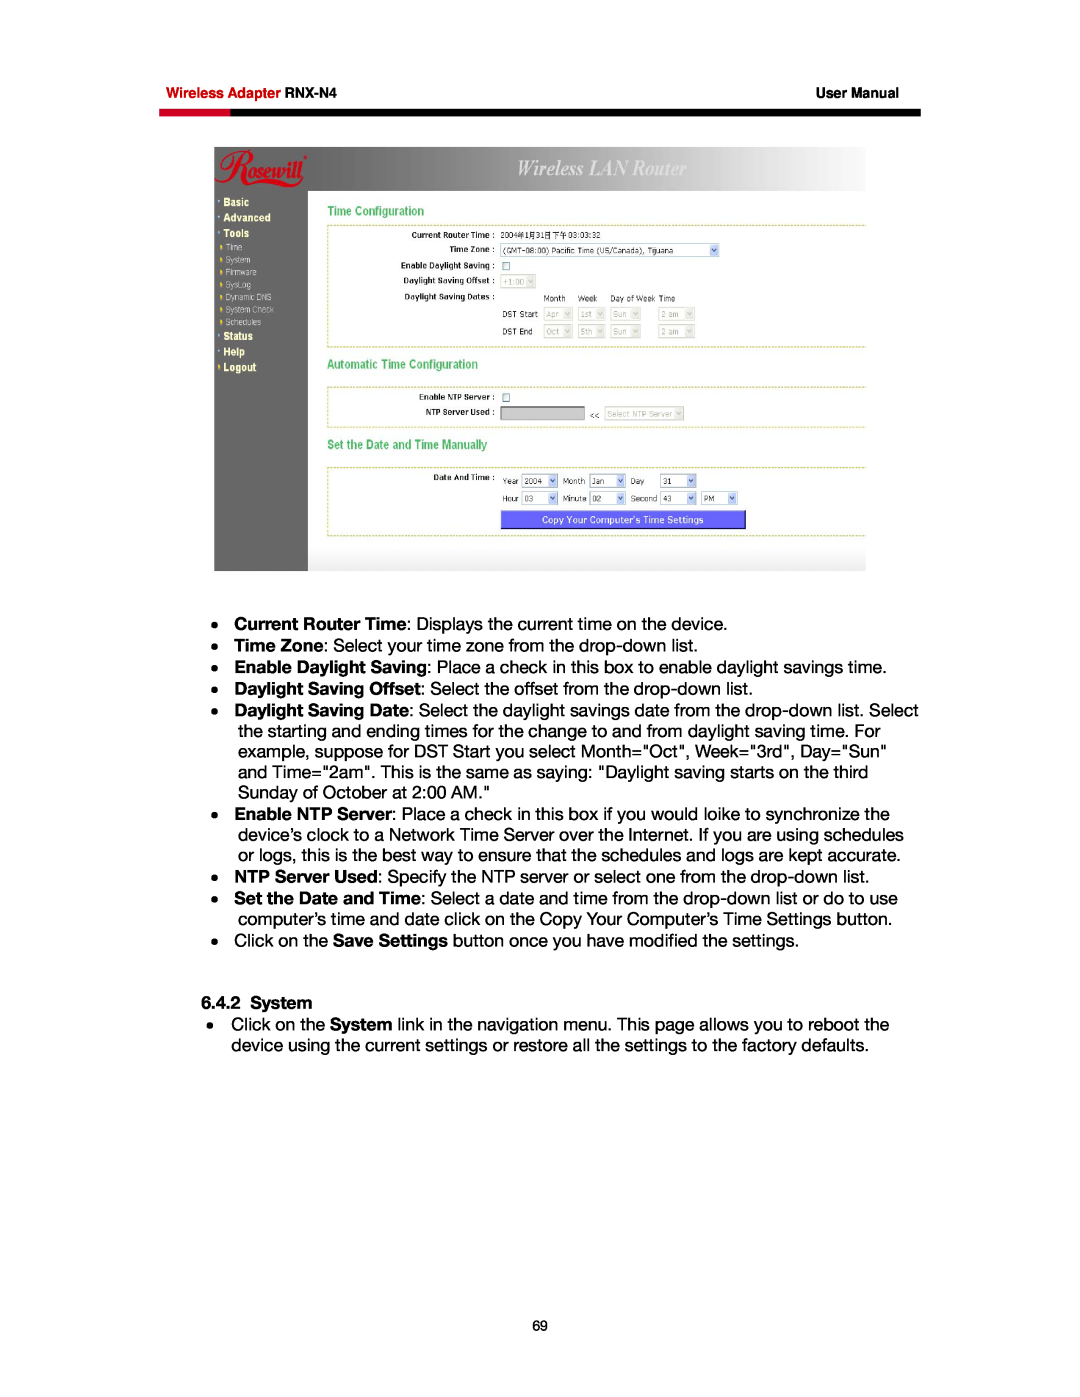 Rosewill RNX-N4 user manual System 